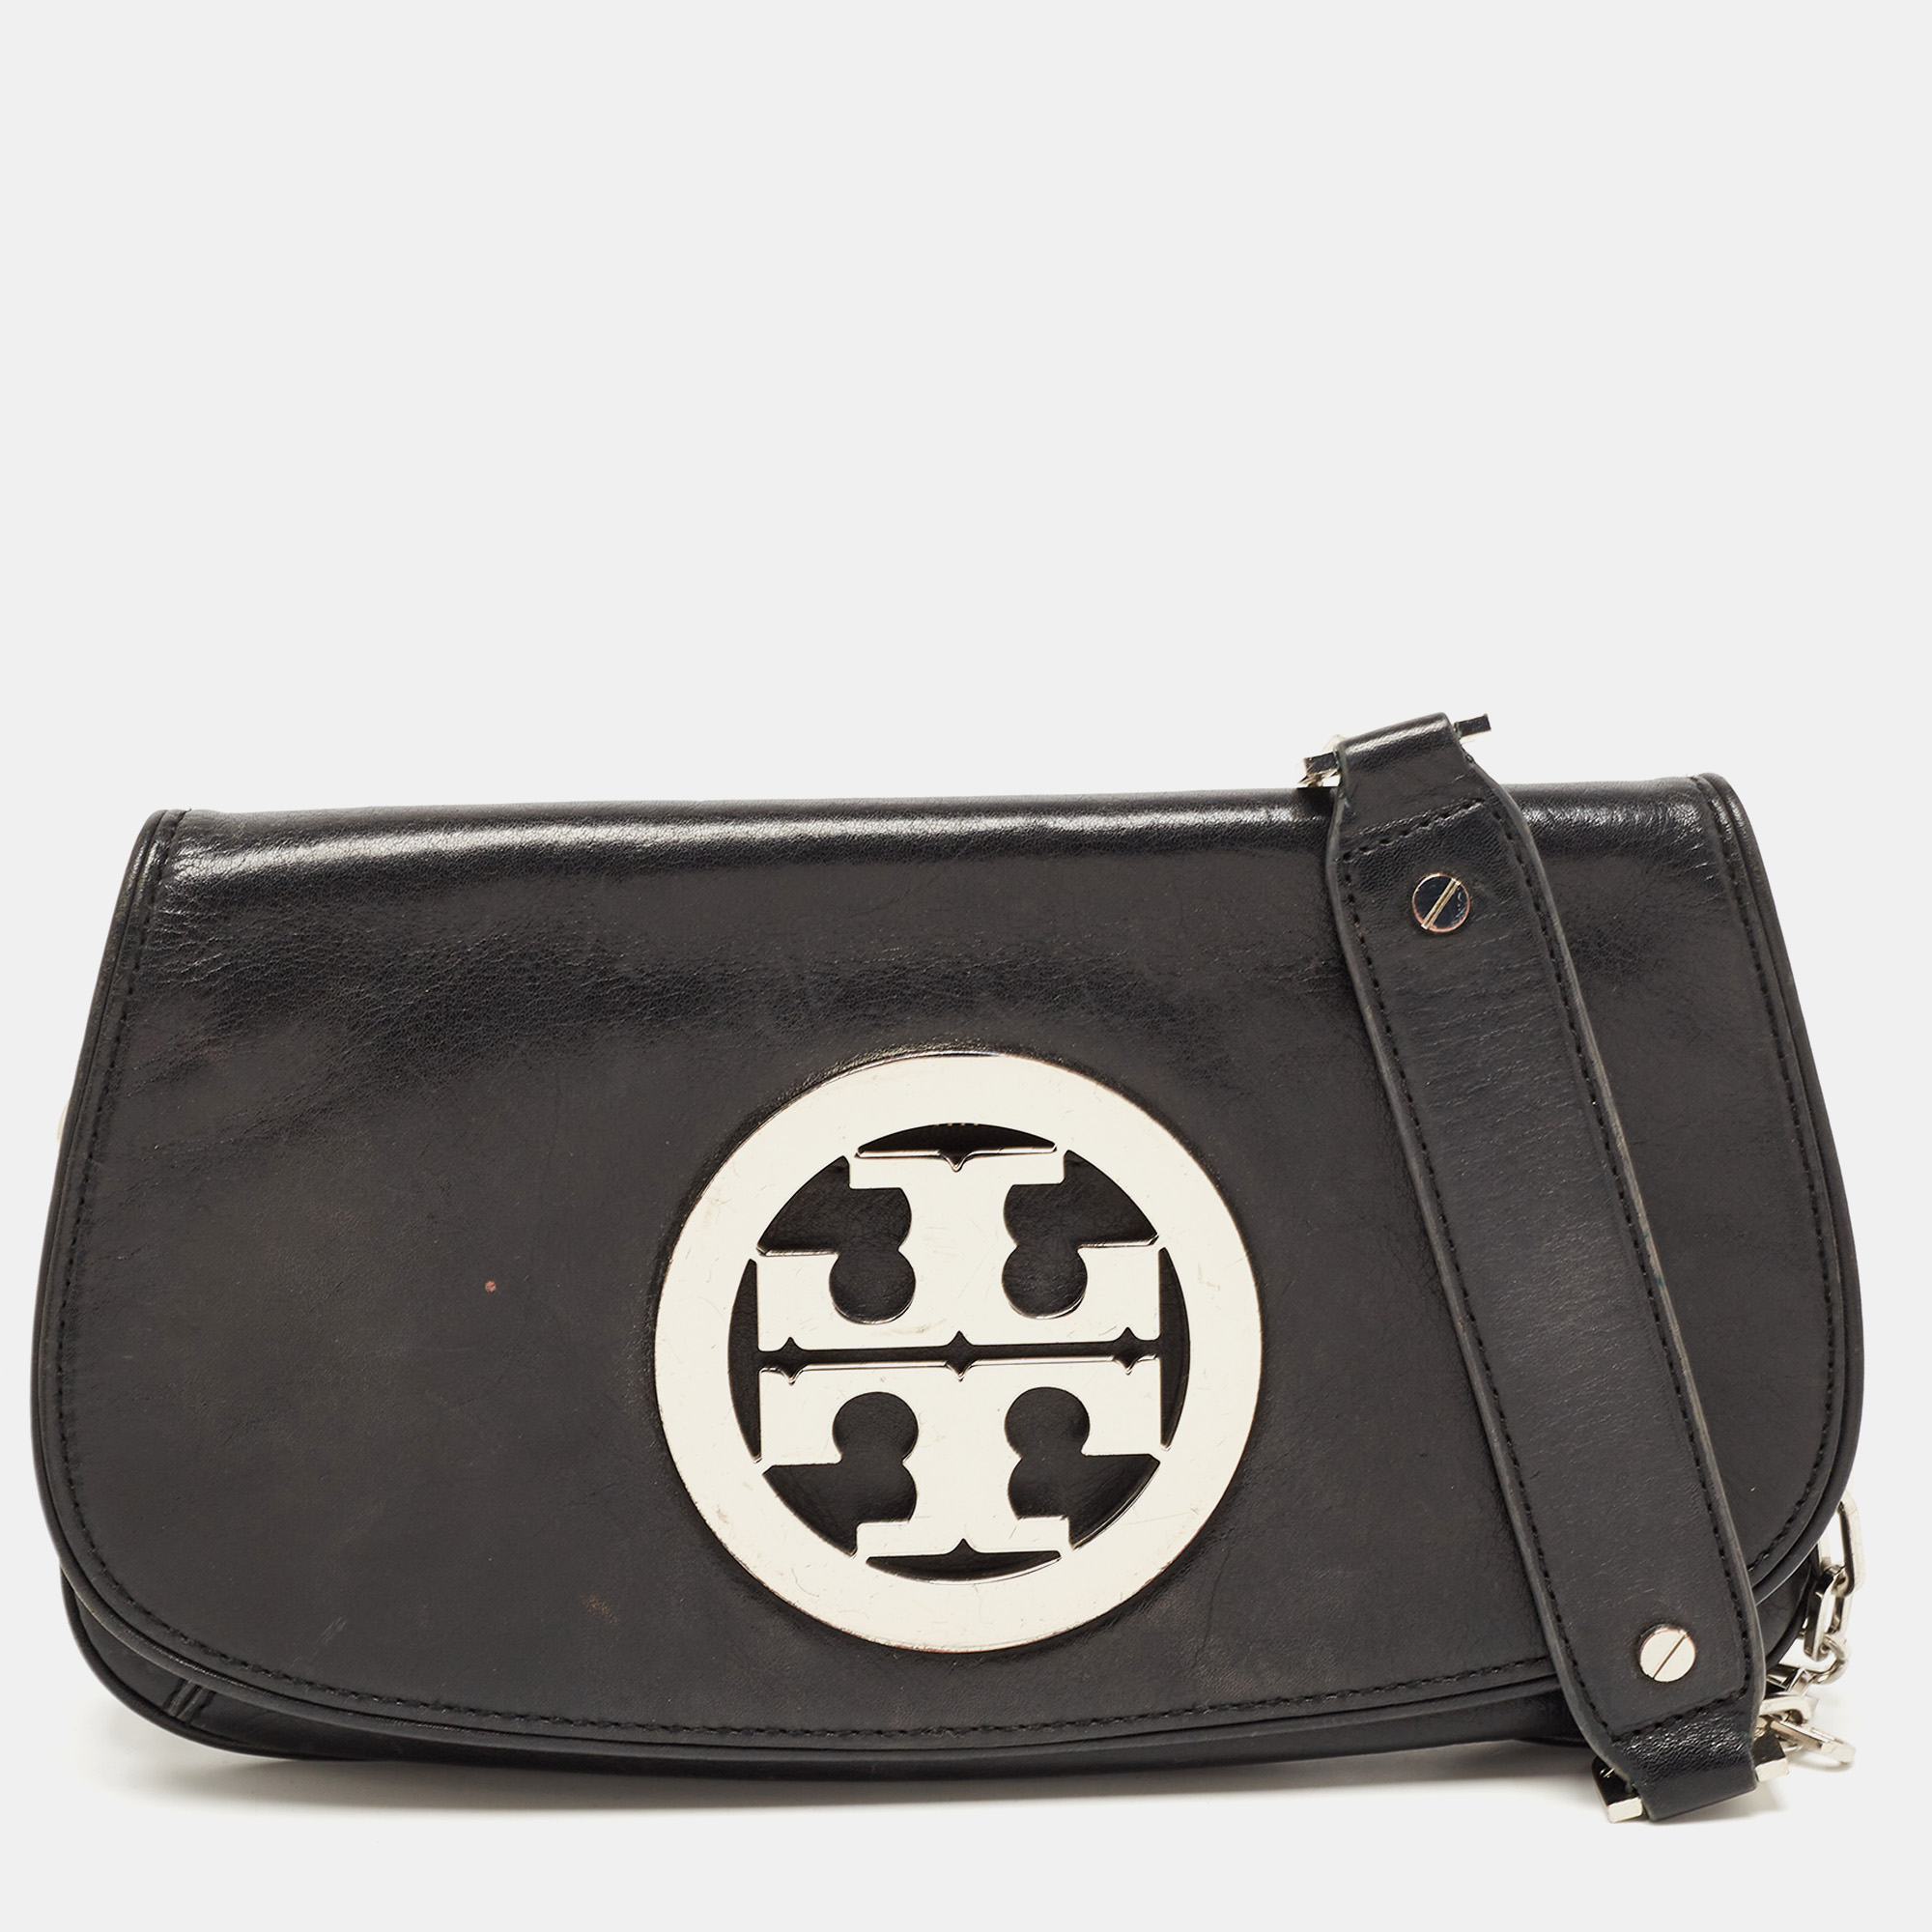 Tory Burch Black Leather Reva Logo Crossbody Bag